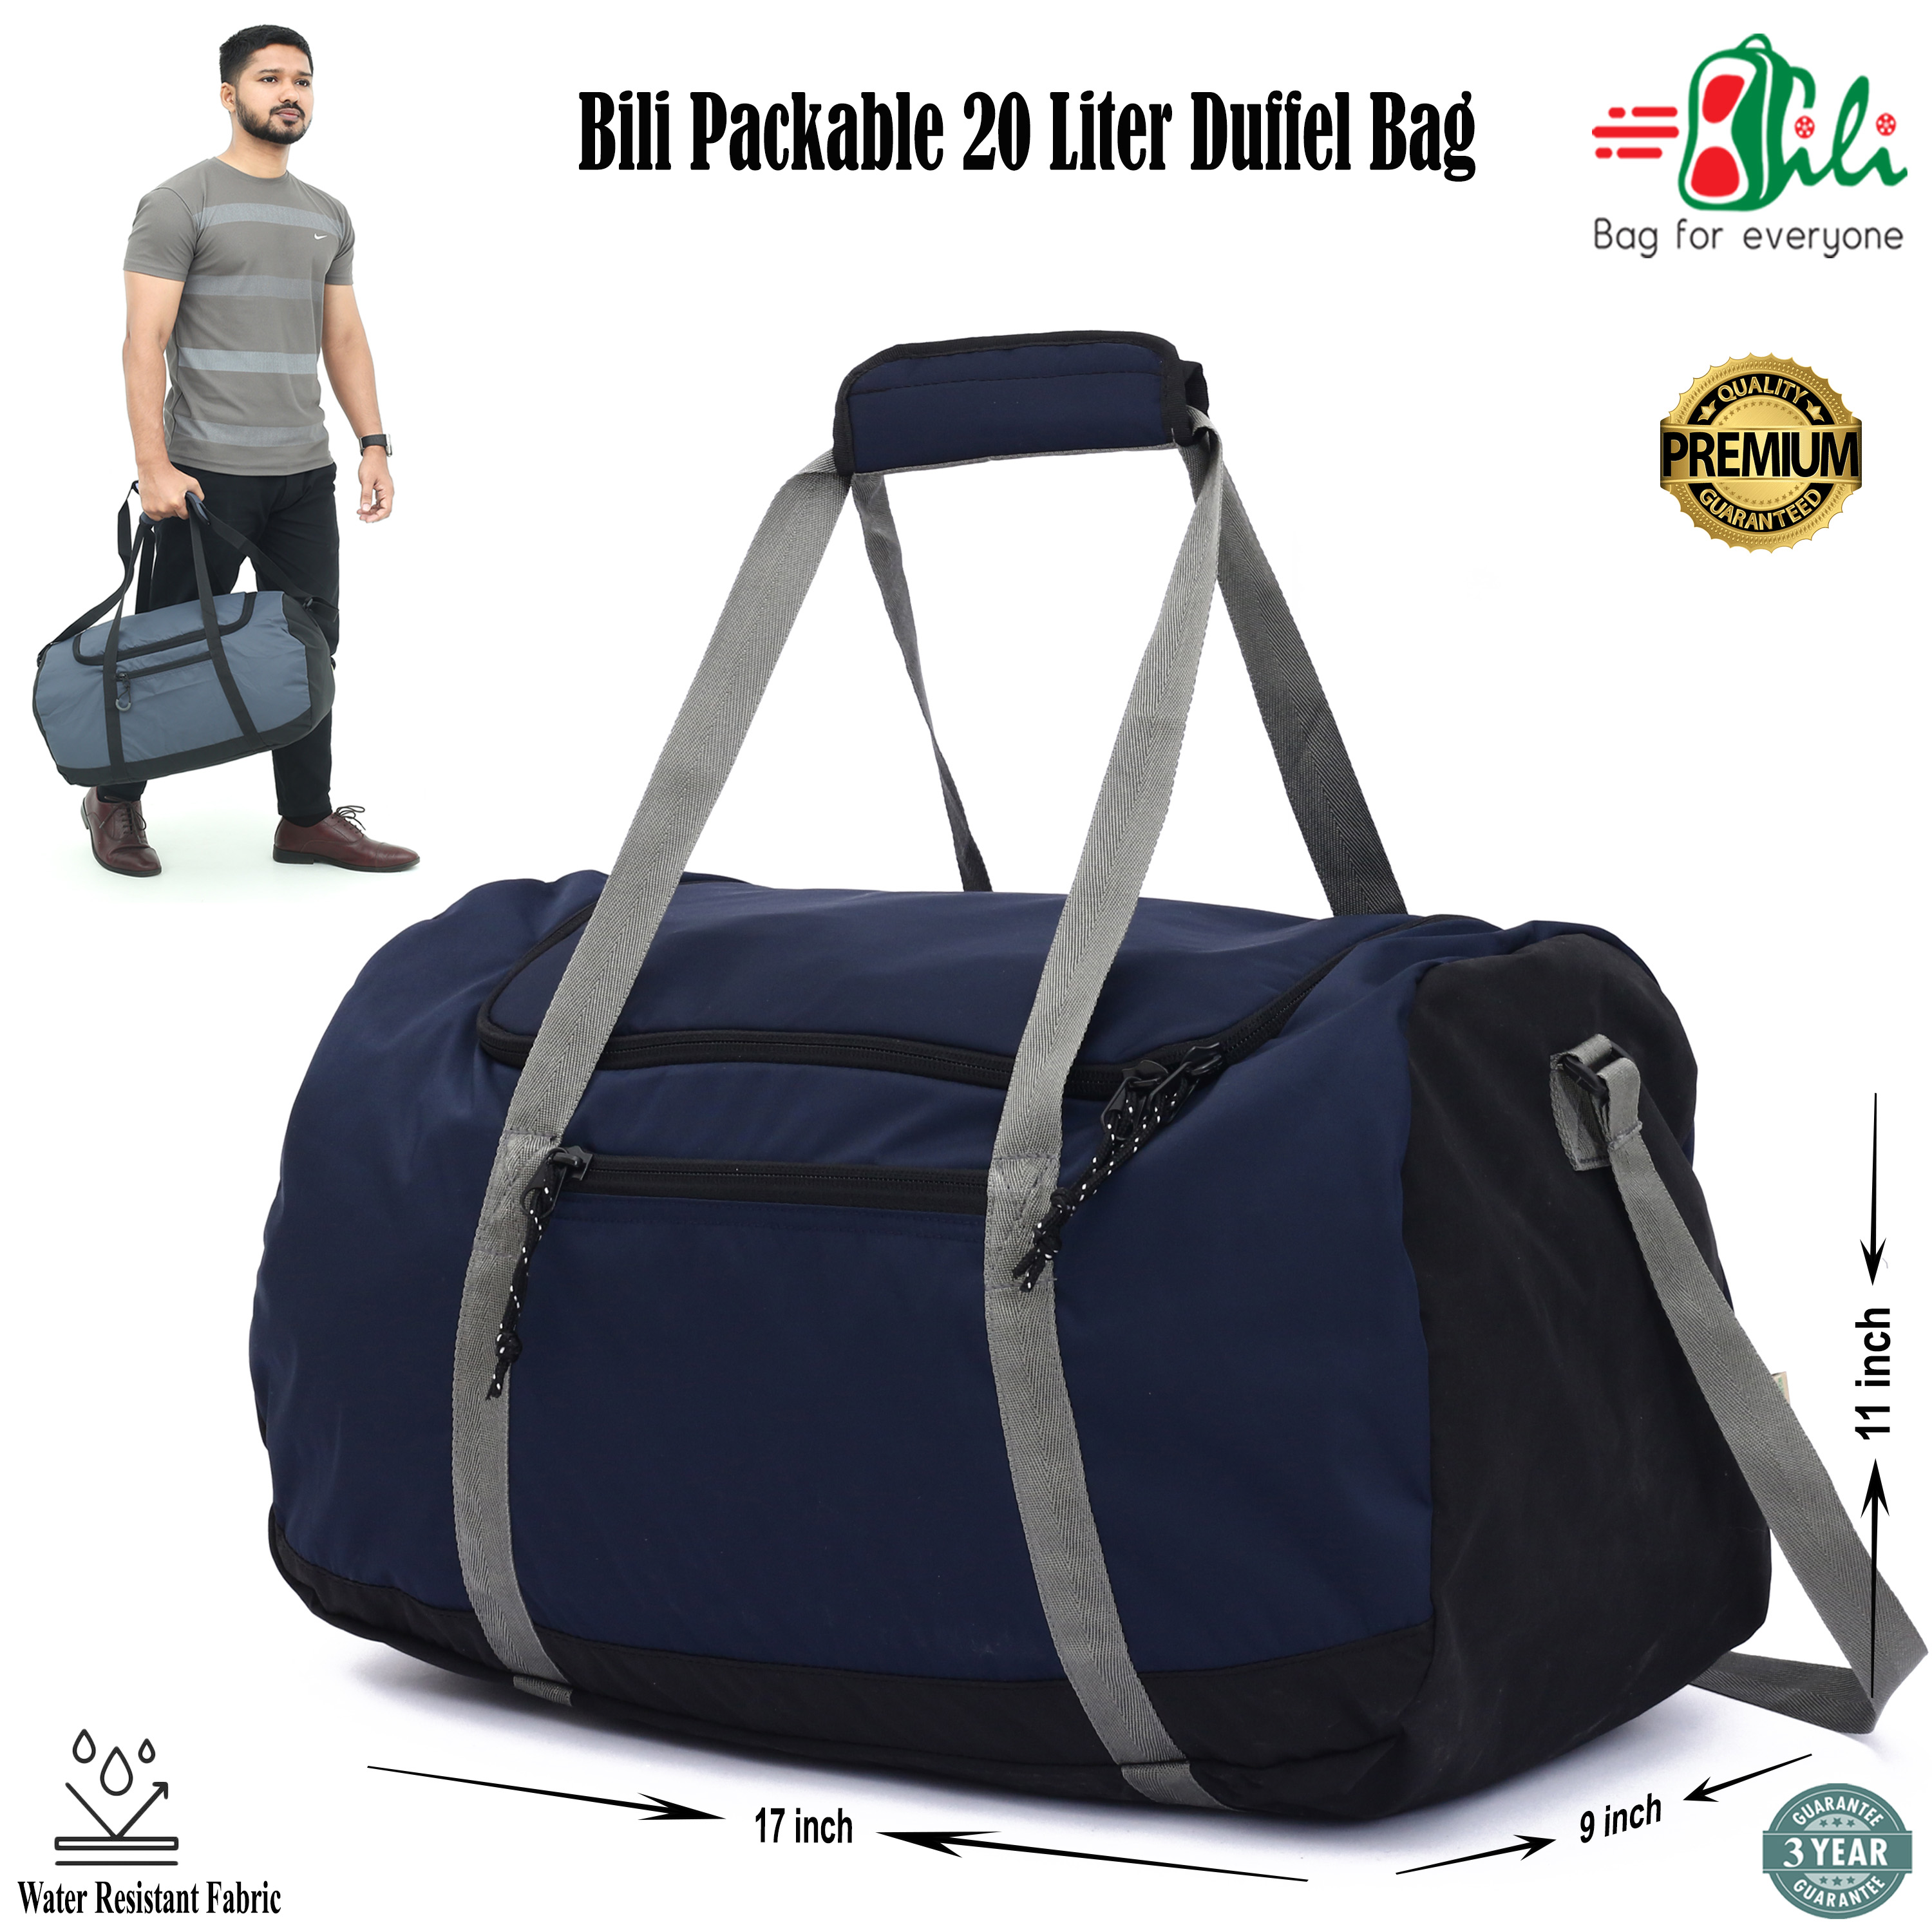 11K+ Bags Luggage Online at Best Price in Bangladesh - Daraz BD